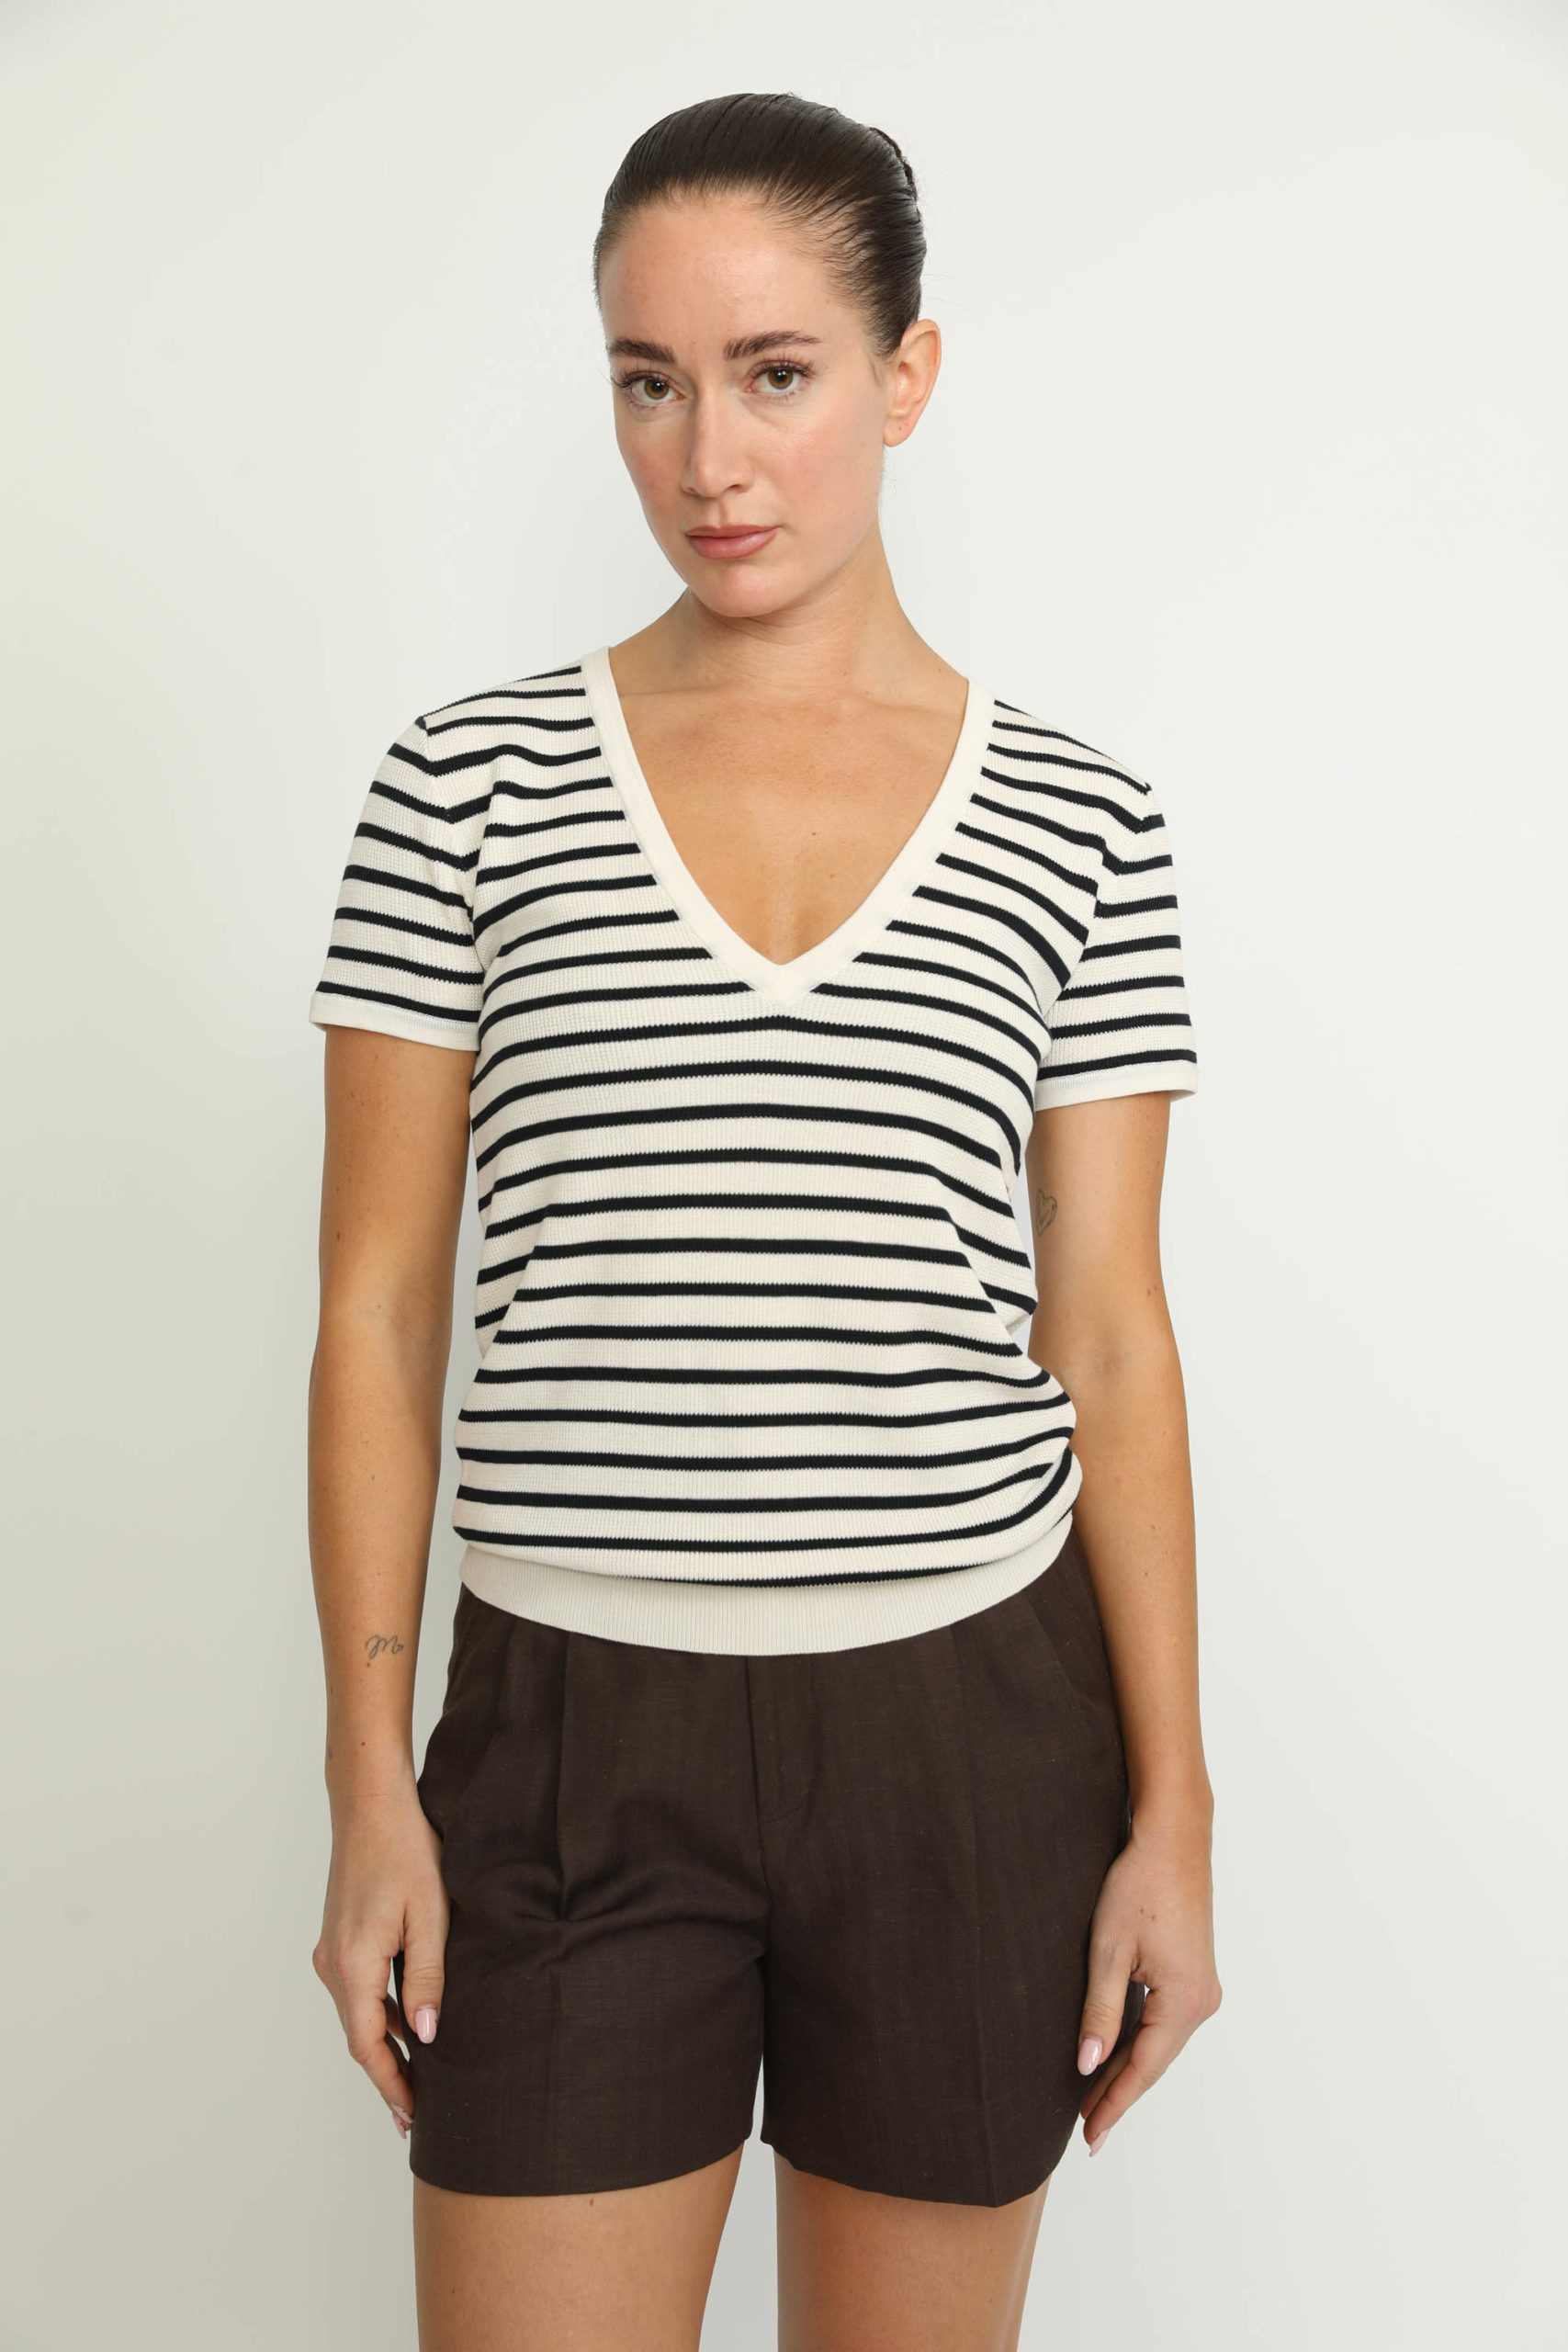 Pisa – Pisa V-neck T-shirt in Navy/ White Stripe